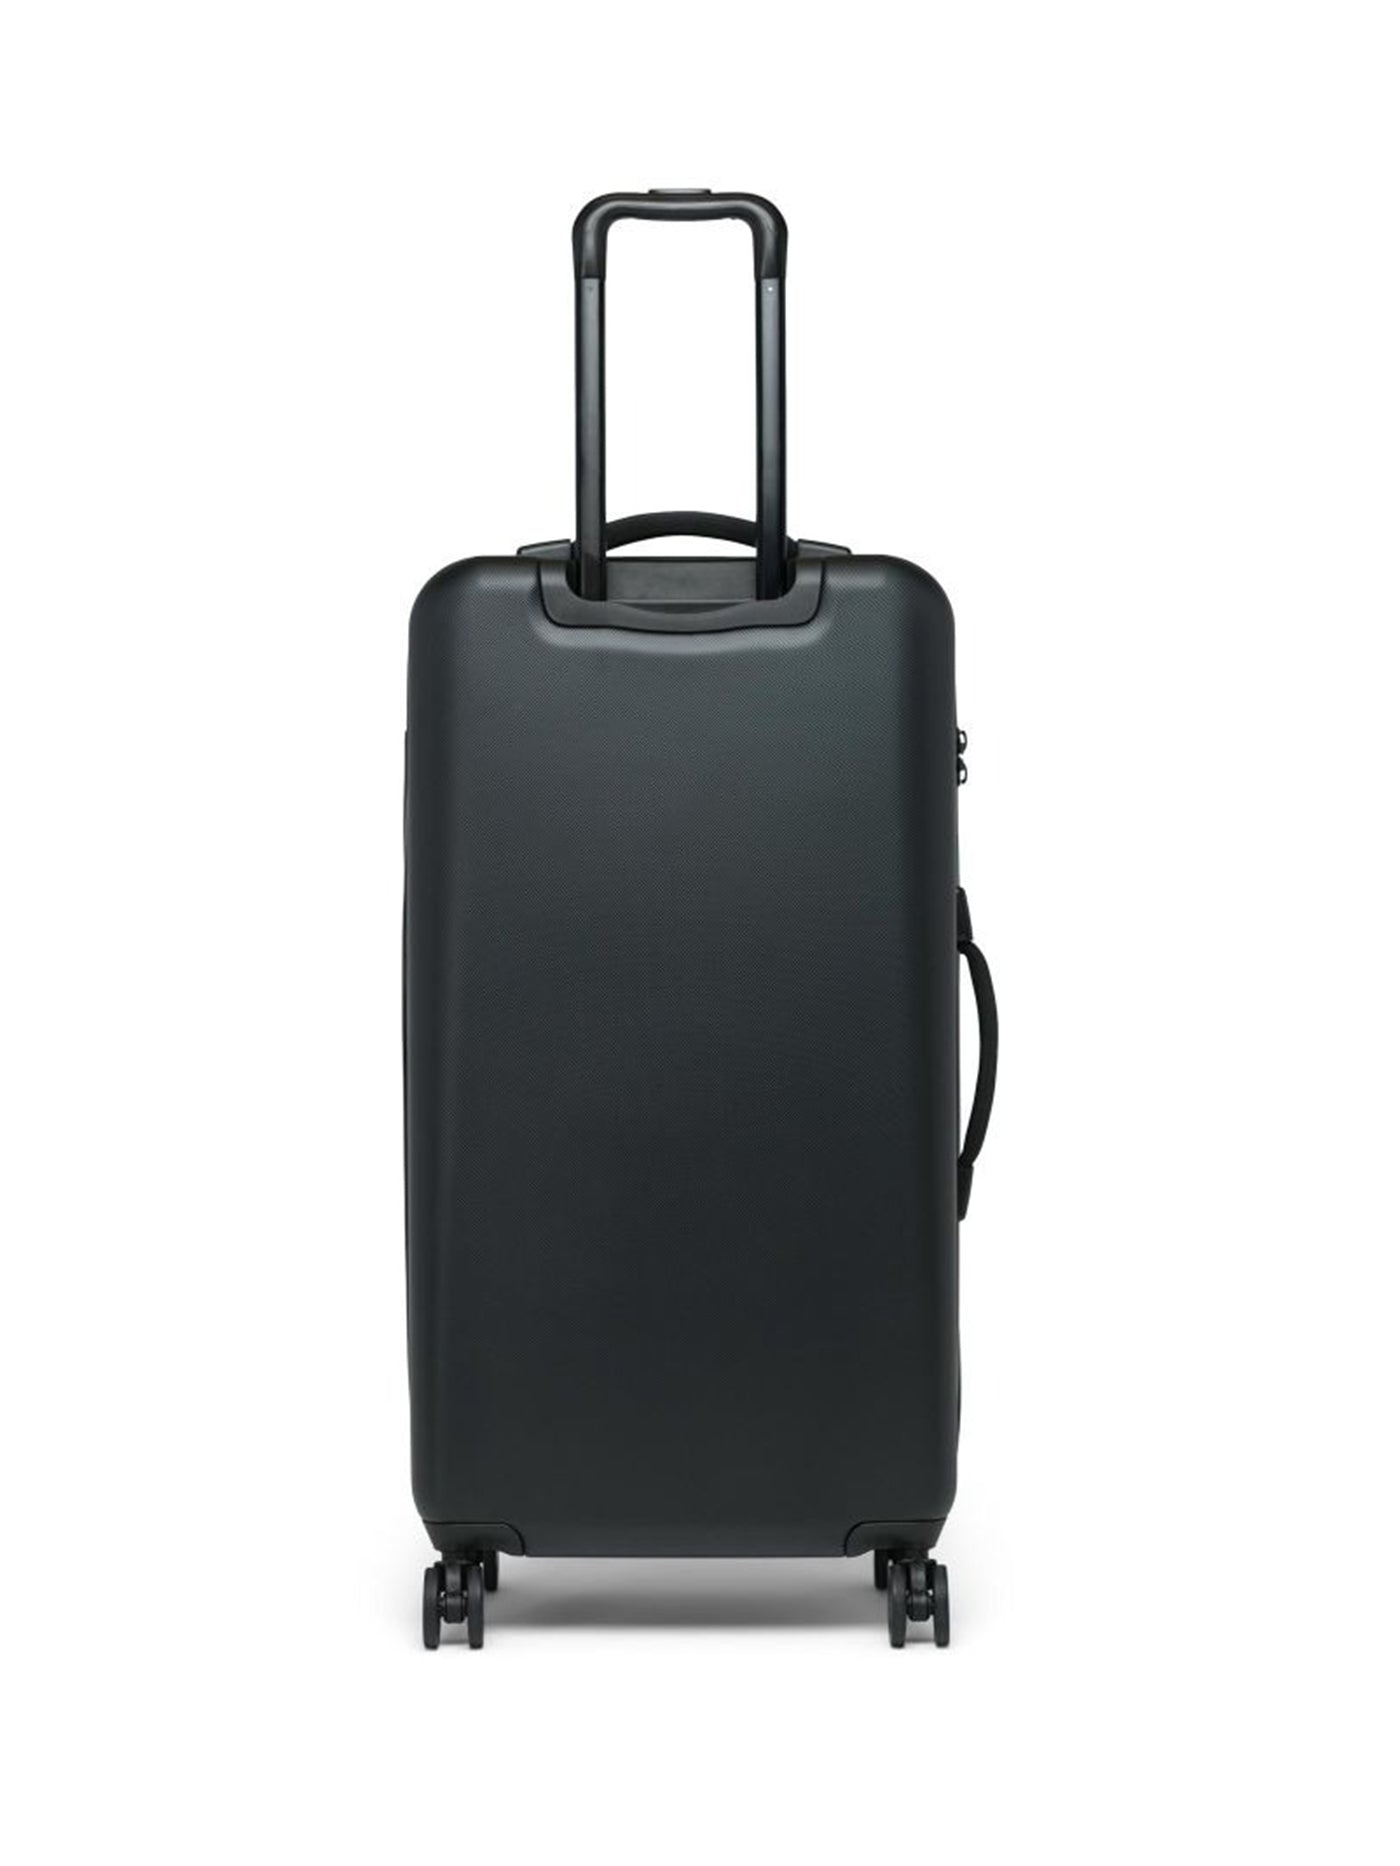 Herschel Trade Large Suitcase